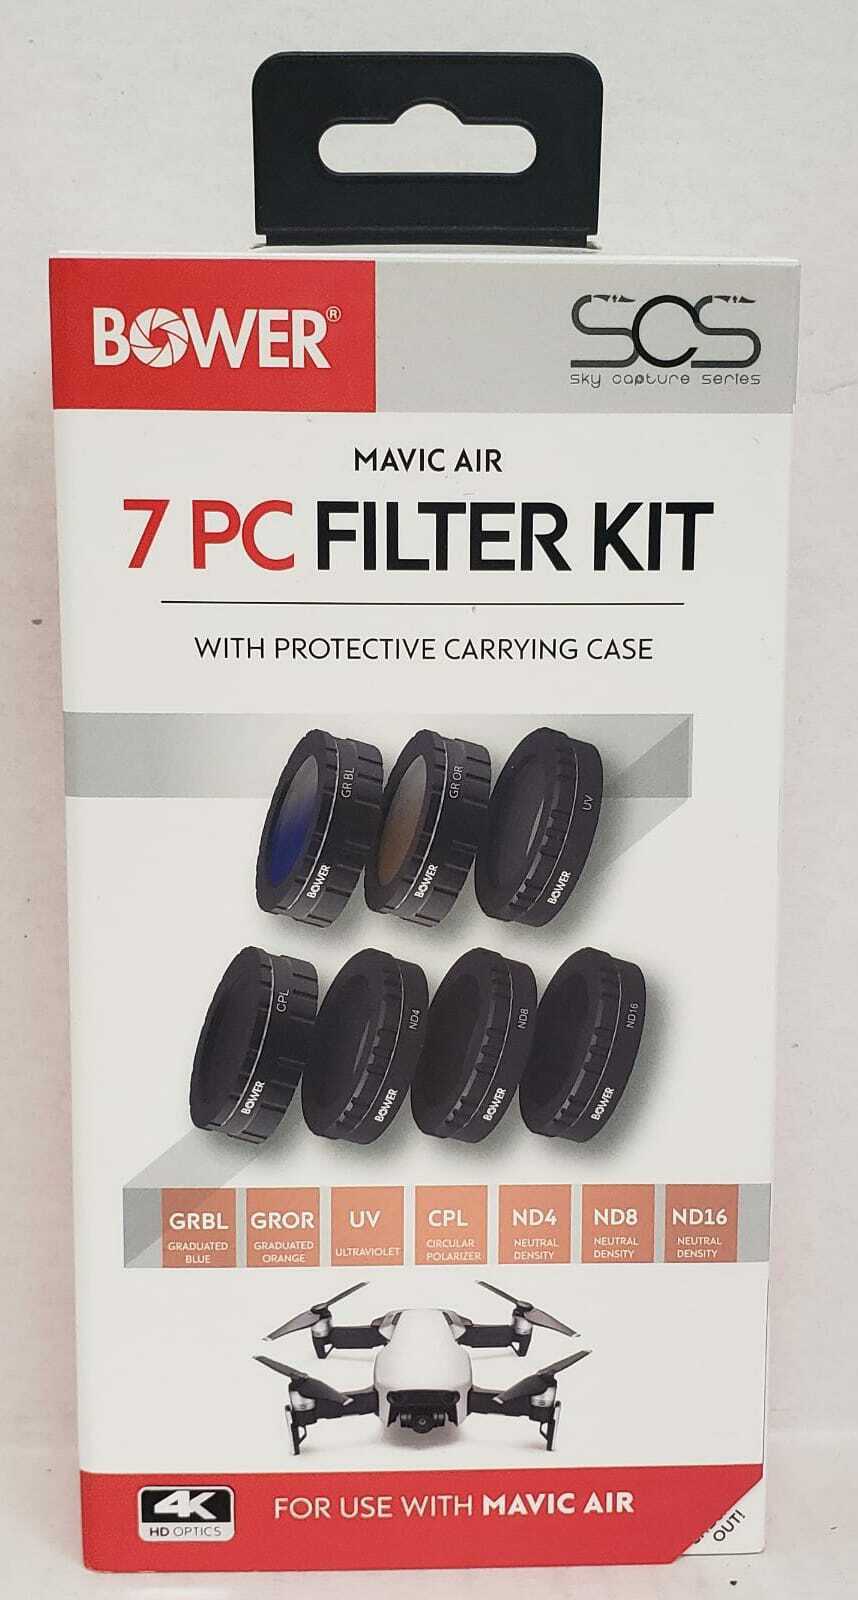 Bower - Sky Capture Series - MAVIC AIR - 7pc Filter Kit - $38.69